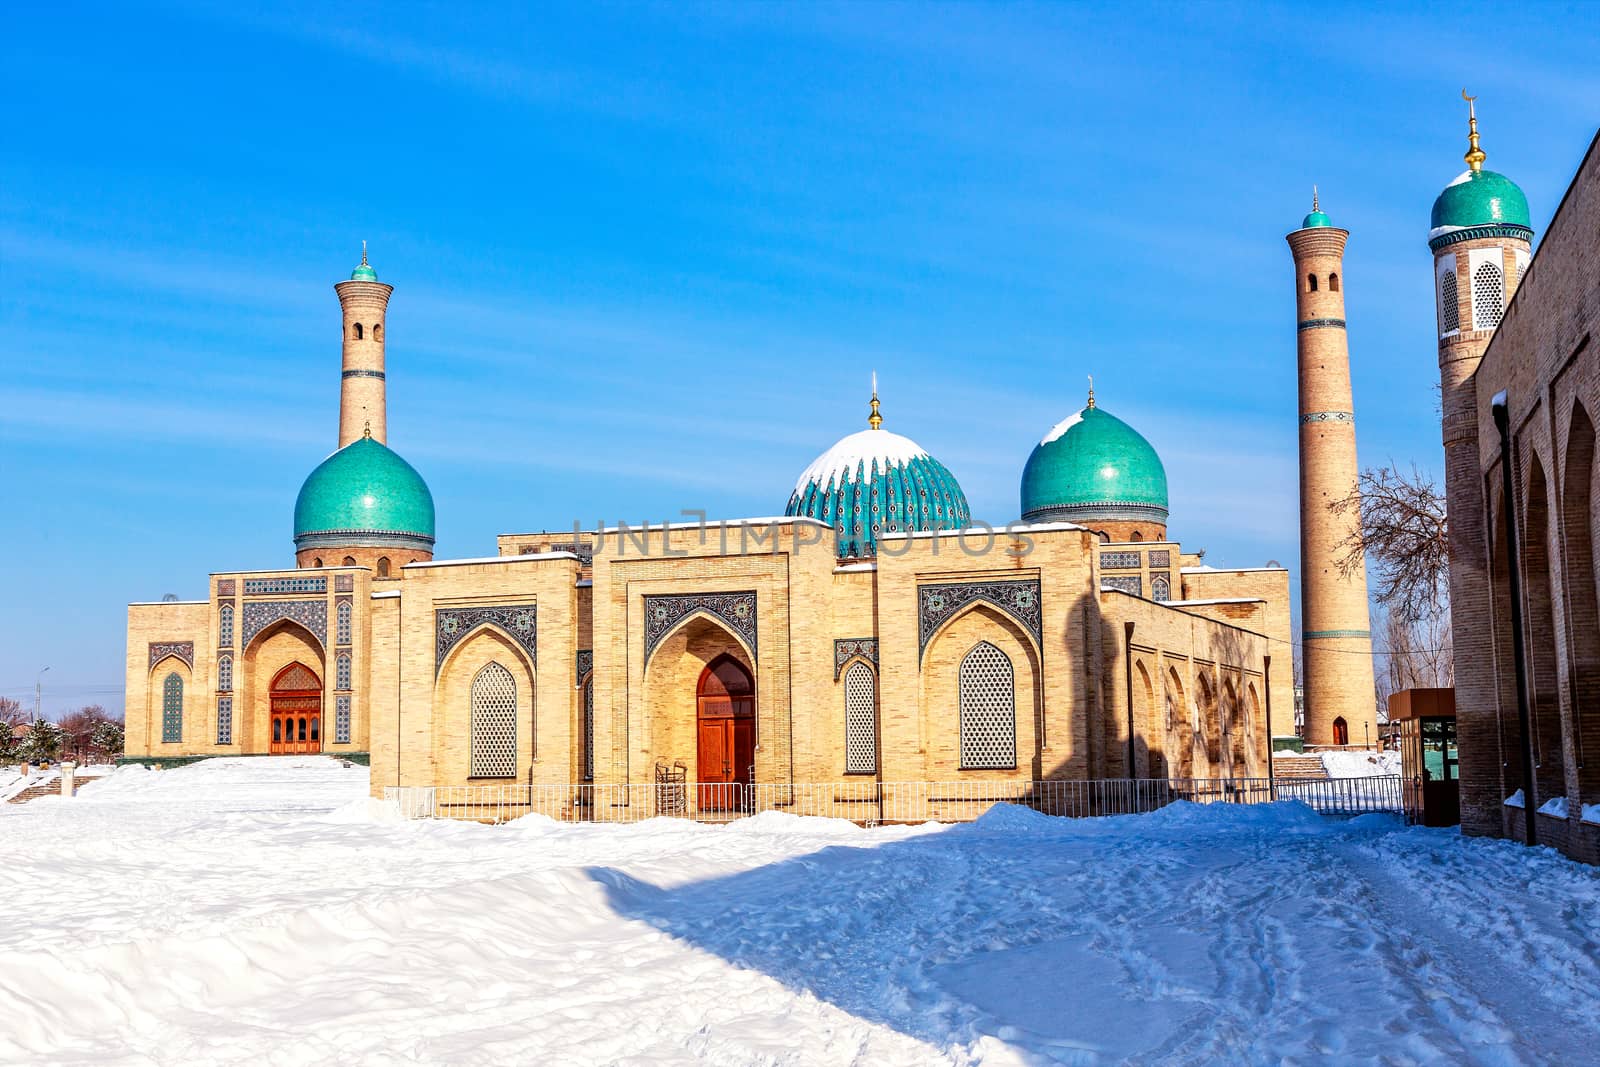 Snow, blue domes and ornated mosques and minarets of Hazrati Imam complex, religious center of Tashkent, Uzbekistan